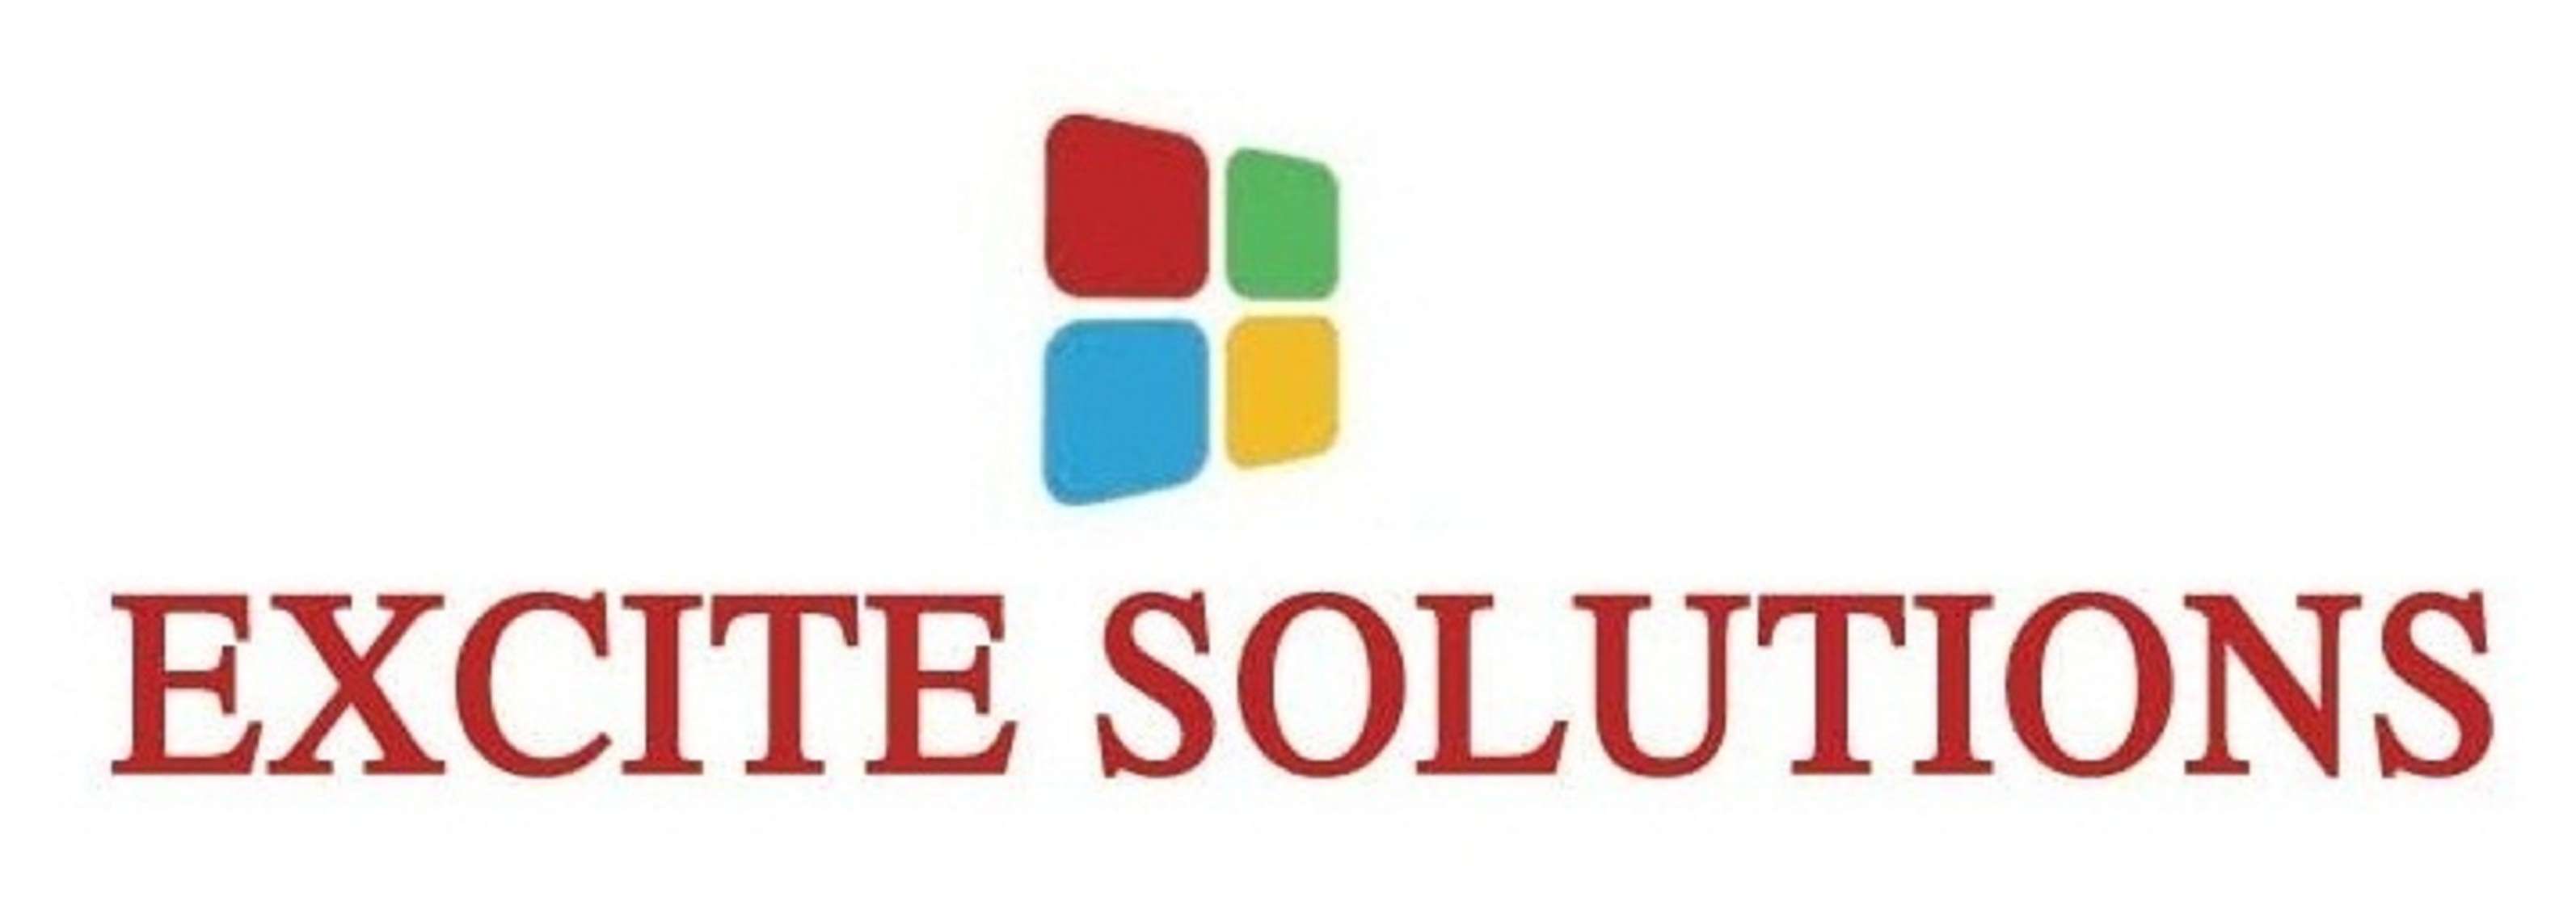 Excite Solutions- Management, Marketing, Recruitment & It Services